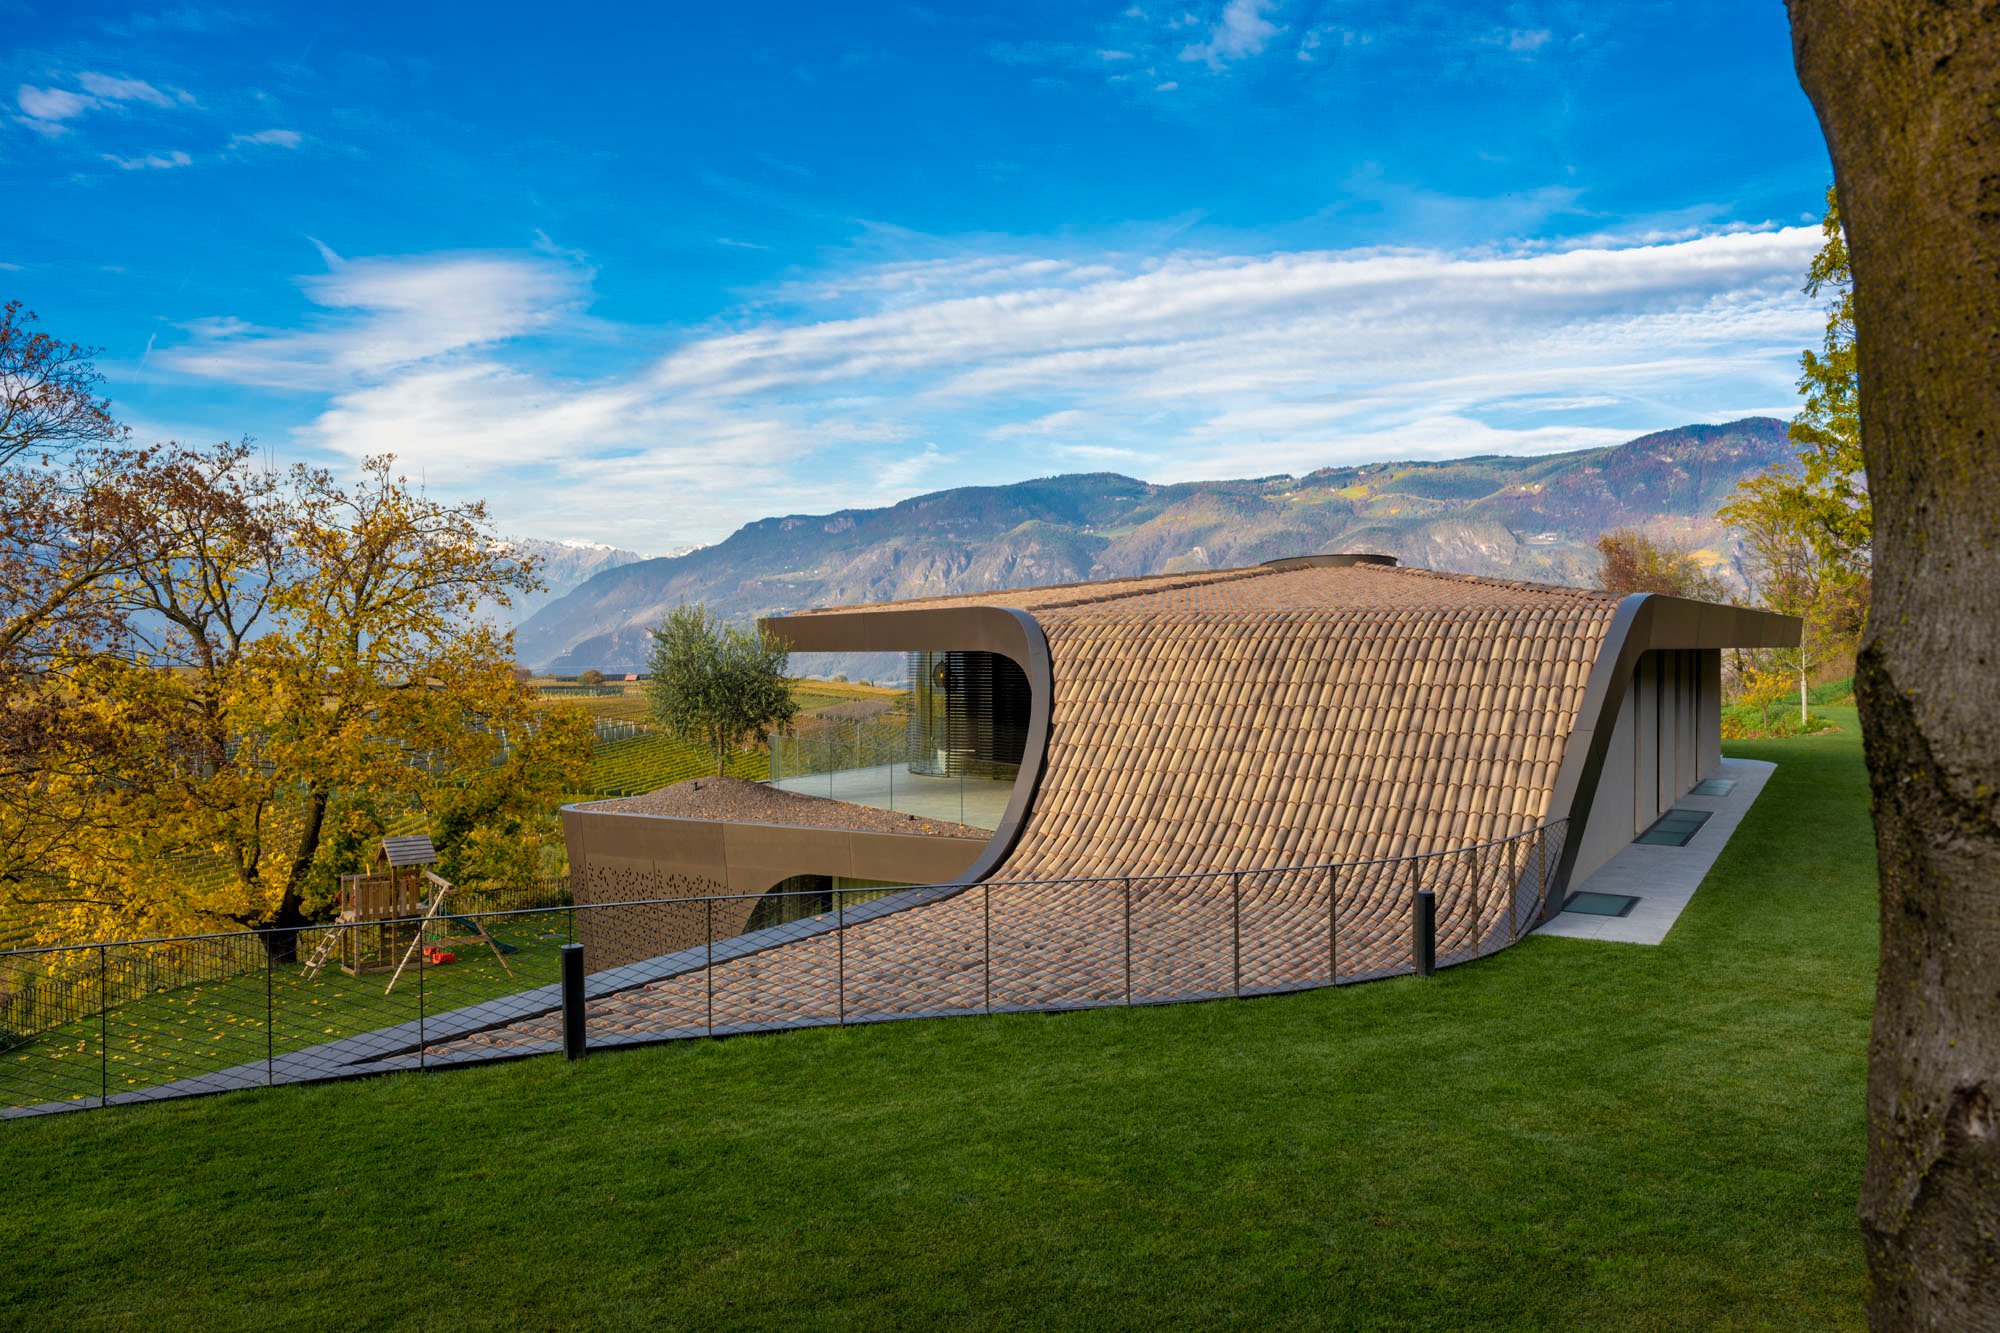 Set among vineyards and groves in Bolzano, Villa EB is reborn